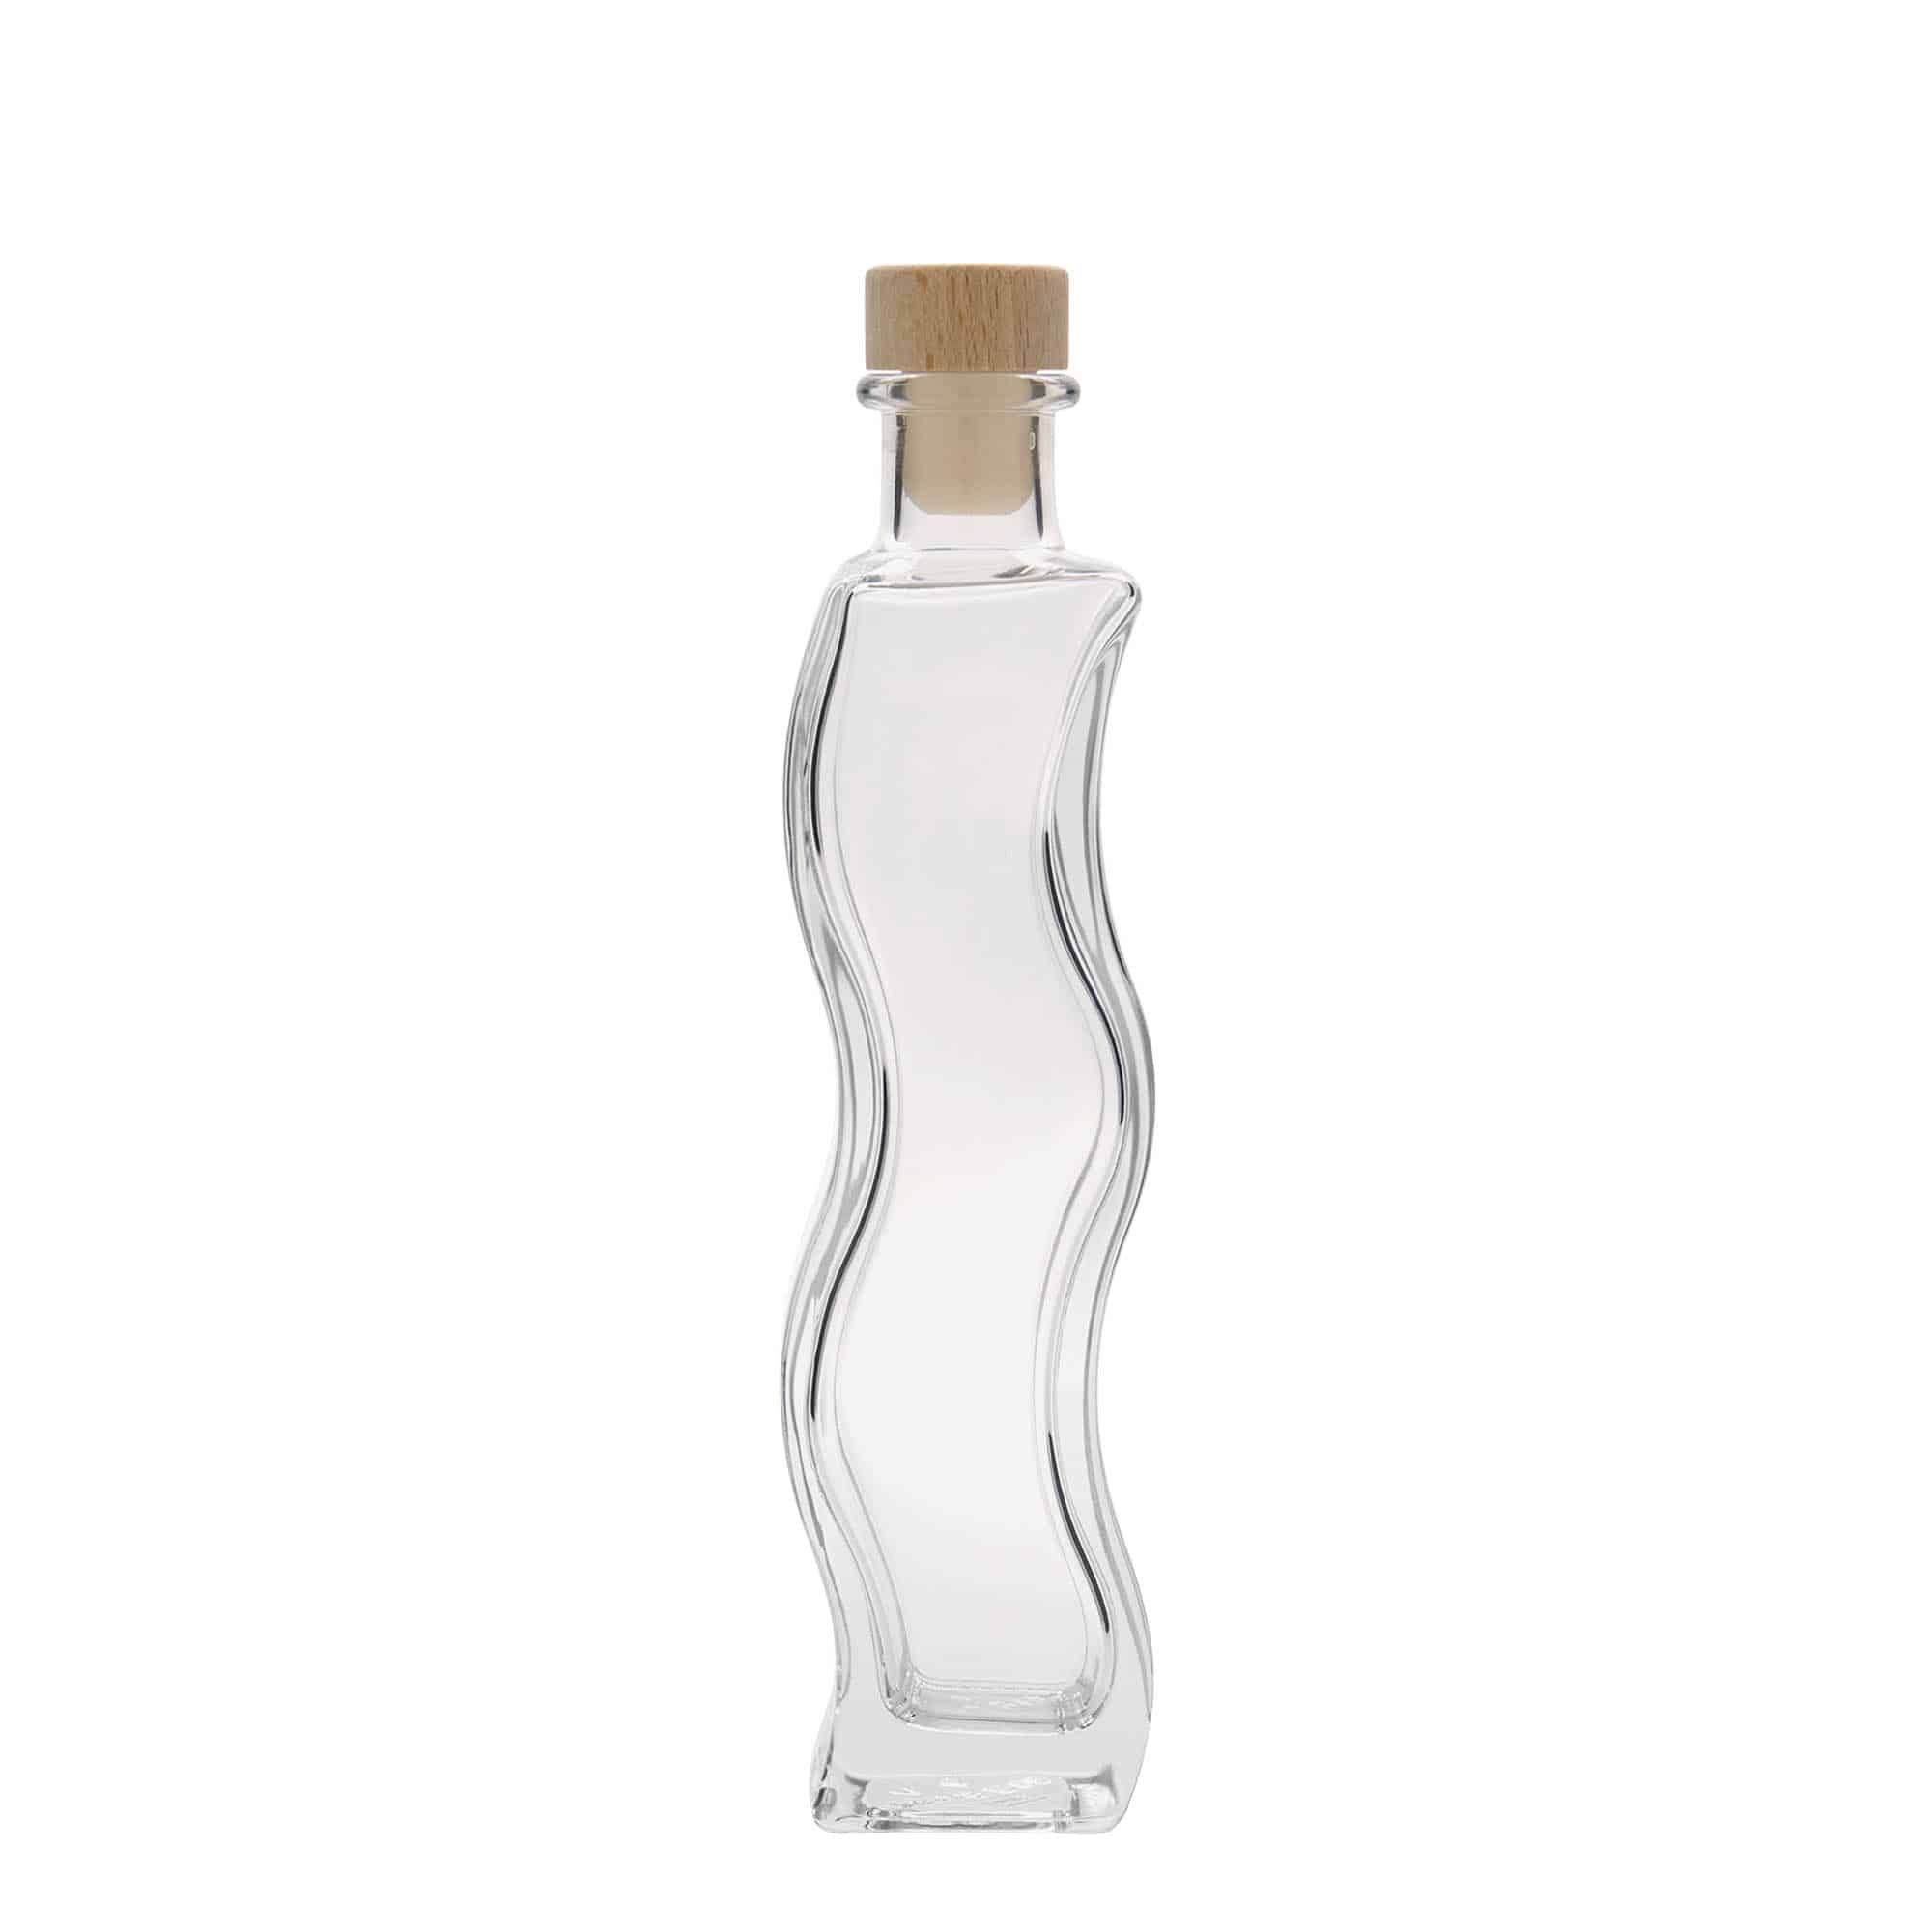 Botella de vidrio 'Onda' de 200 ml, cuadrada, boca: corcho